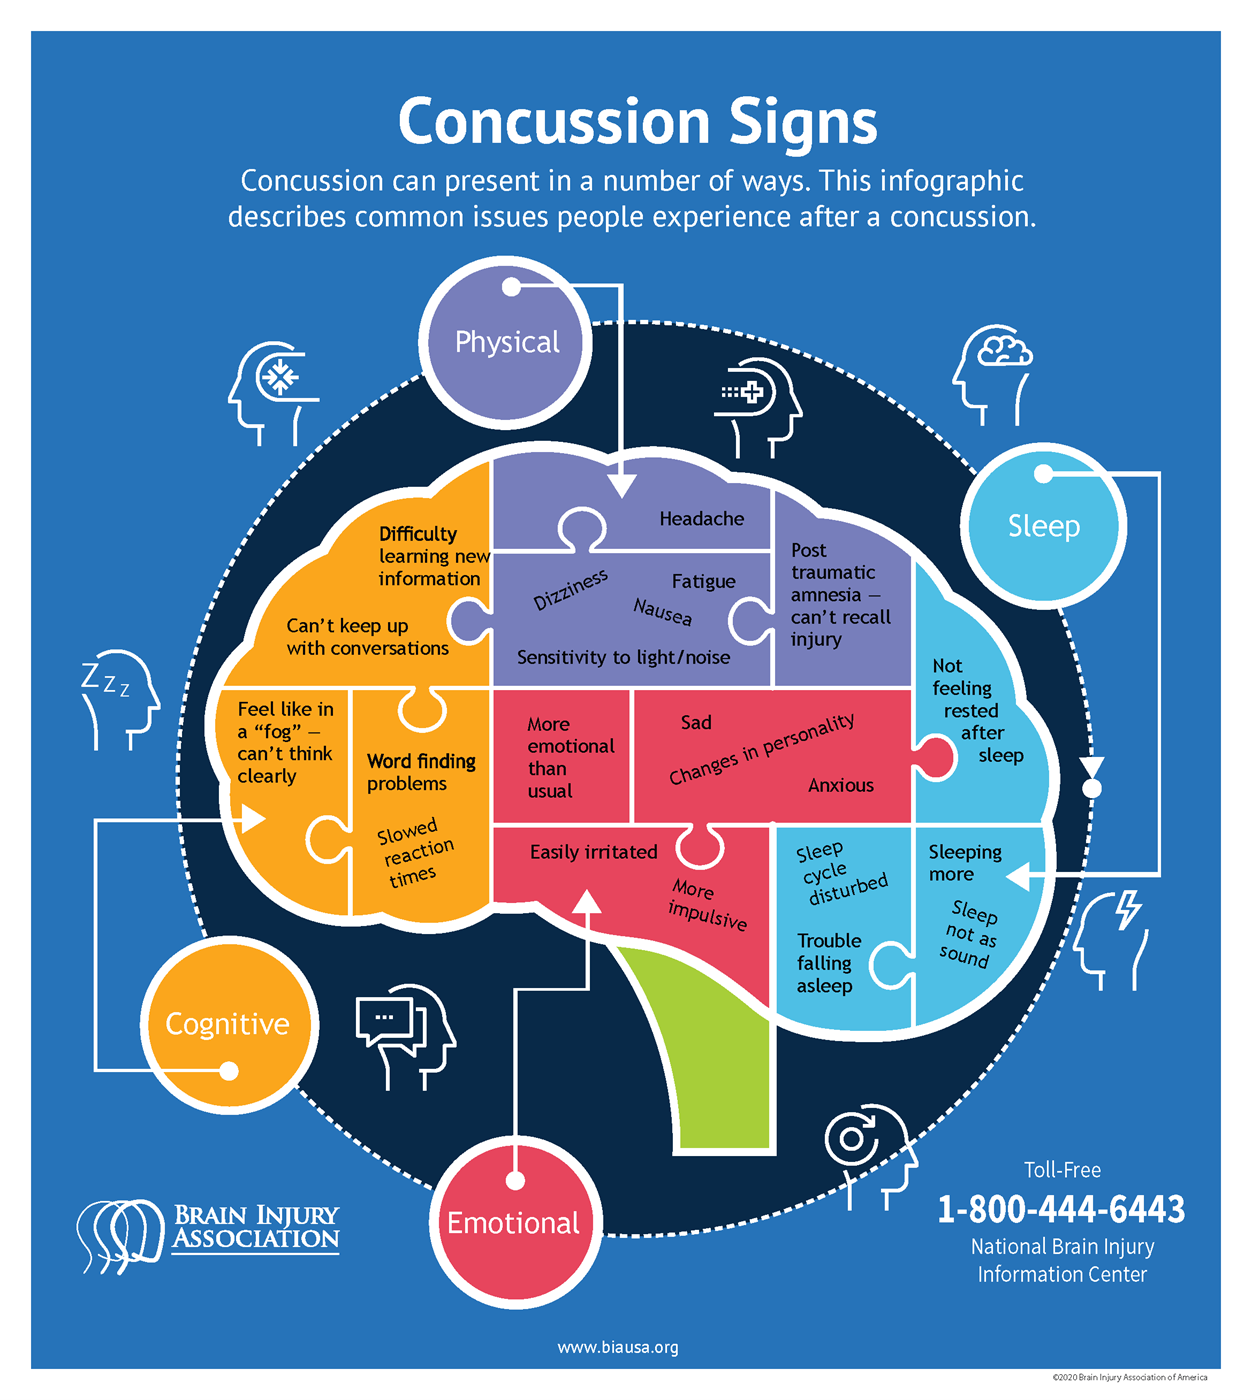 Concussion Signs illustration image